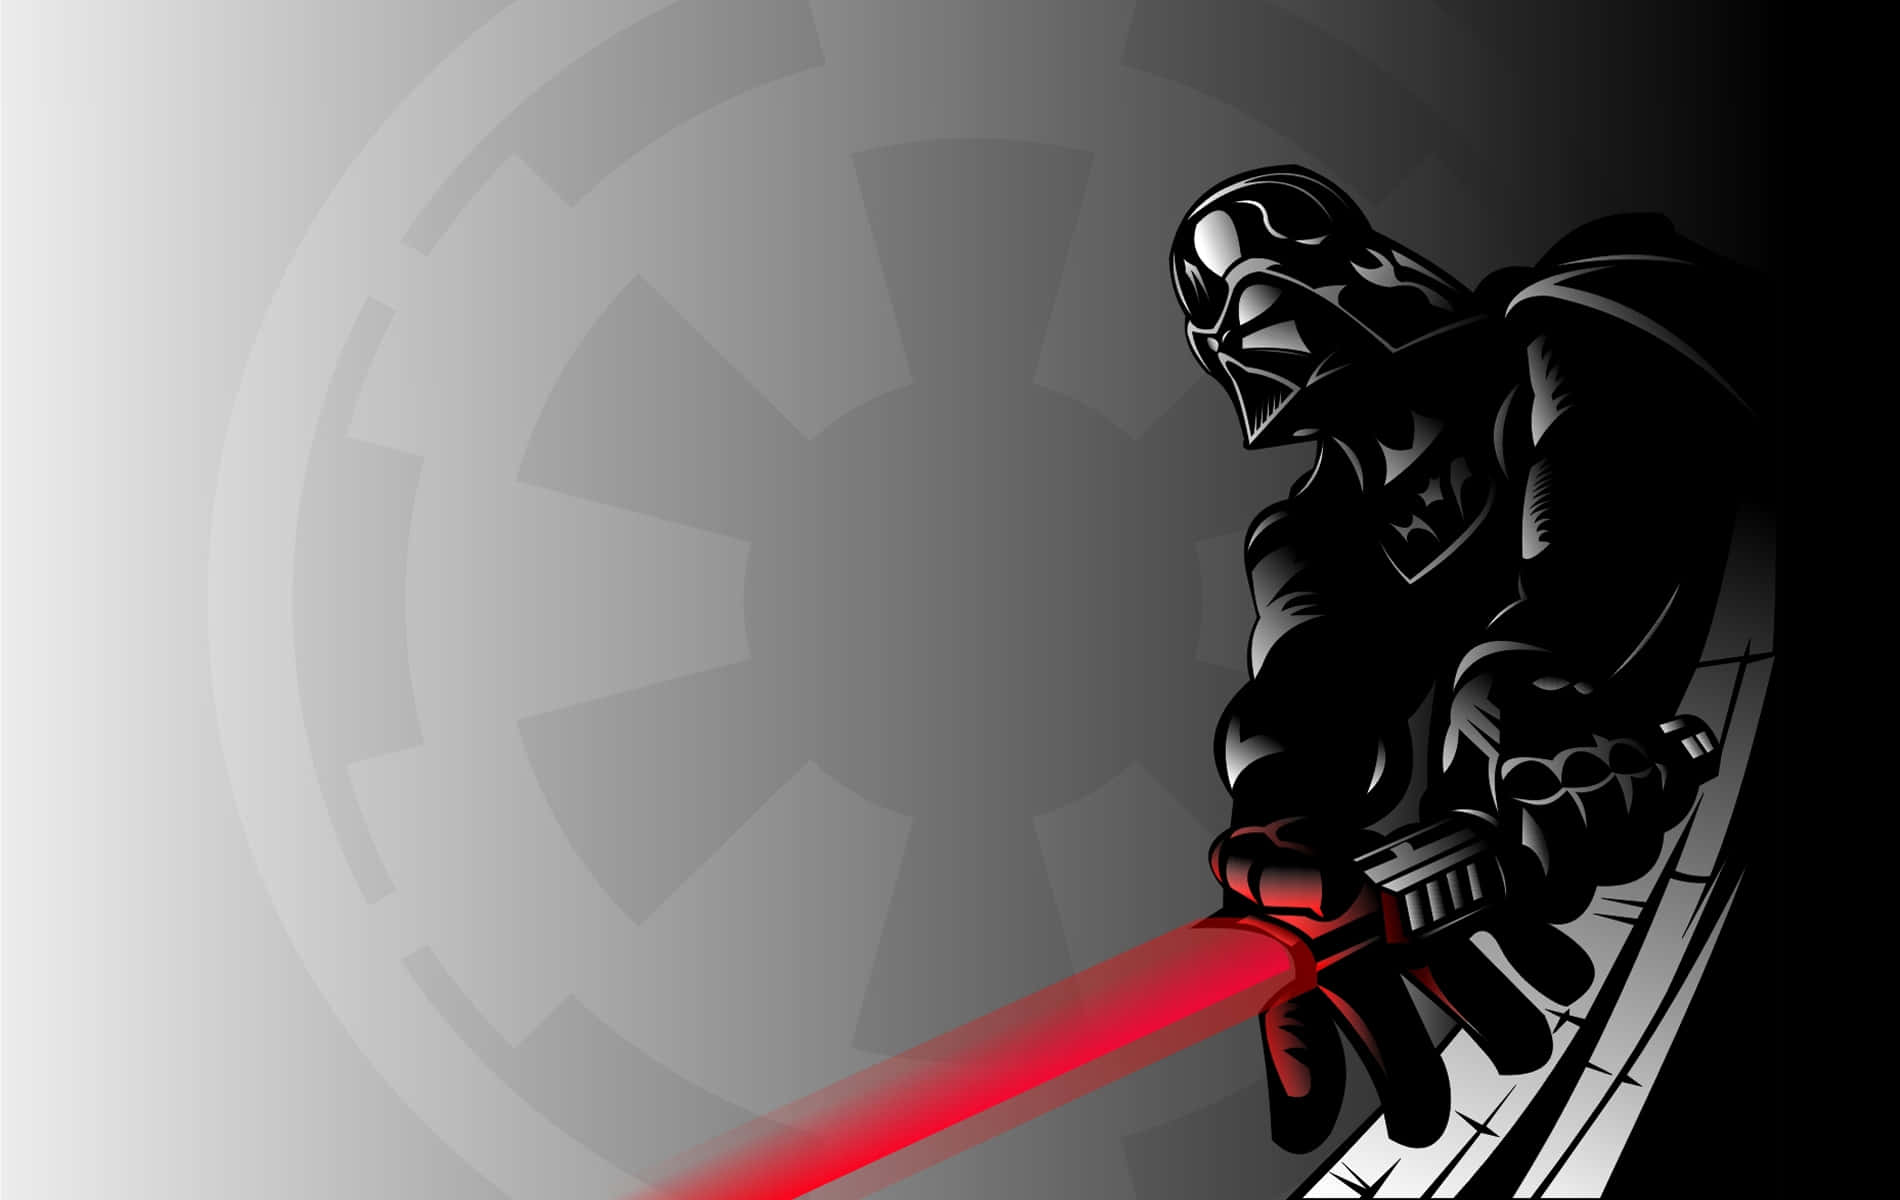 Darth Vader – The Face of Evil